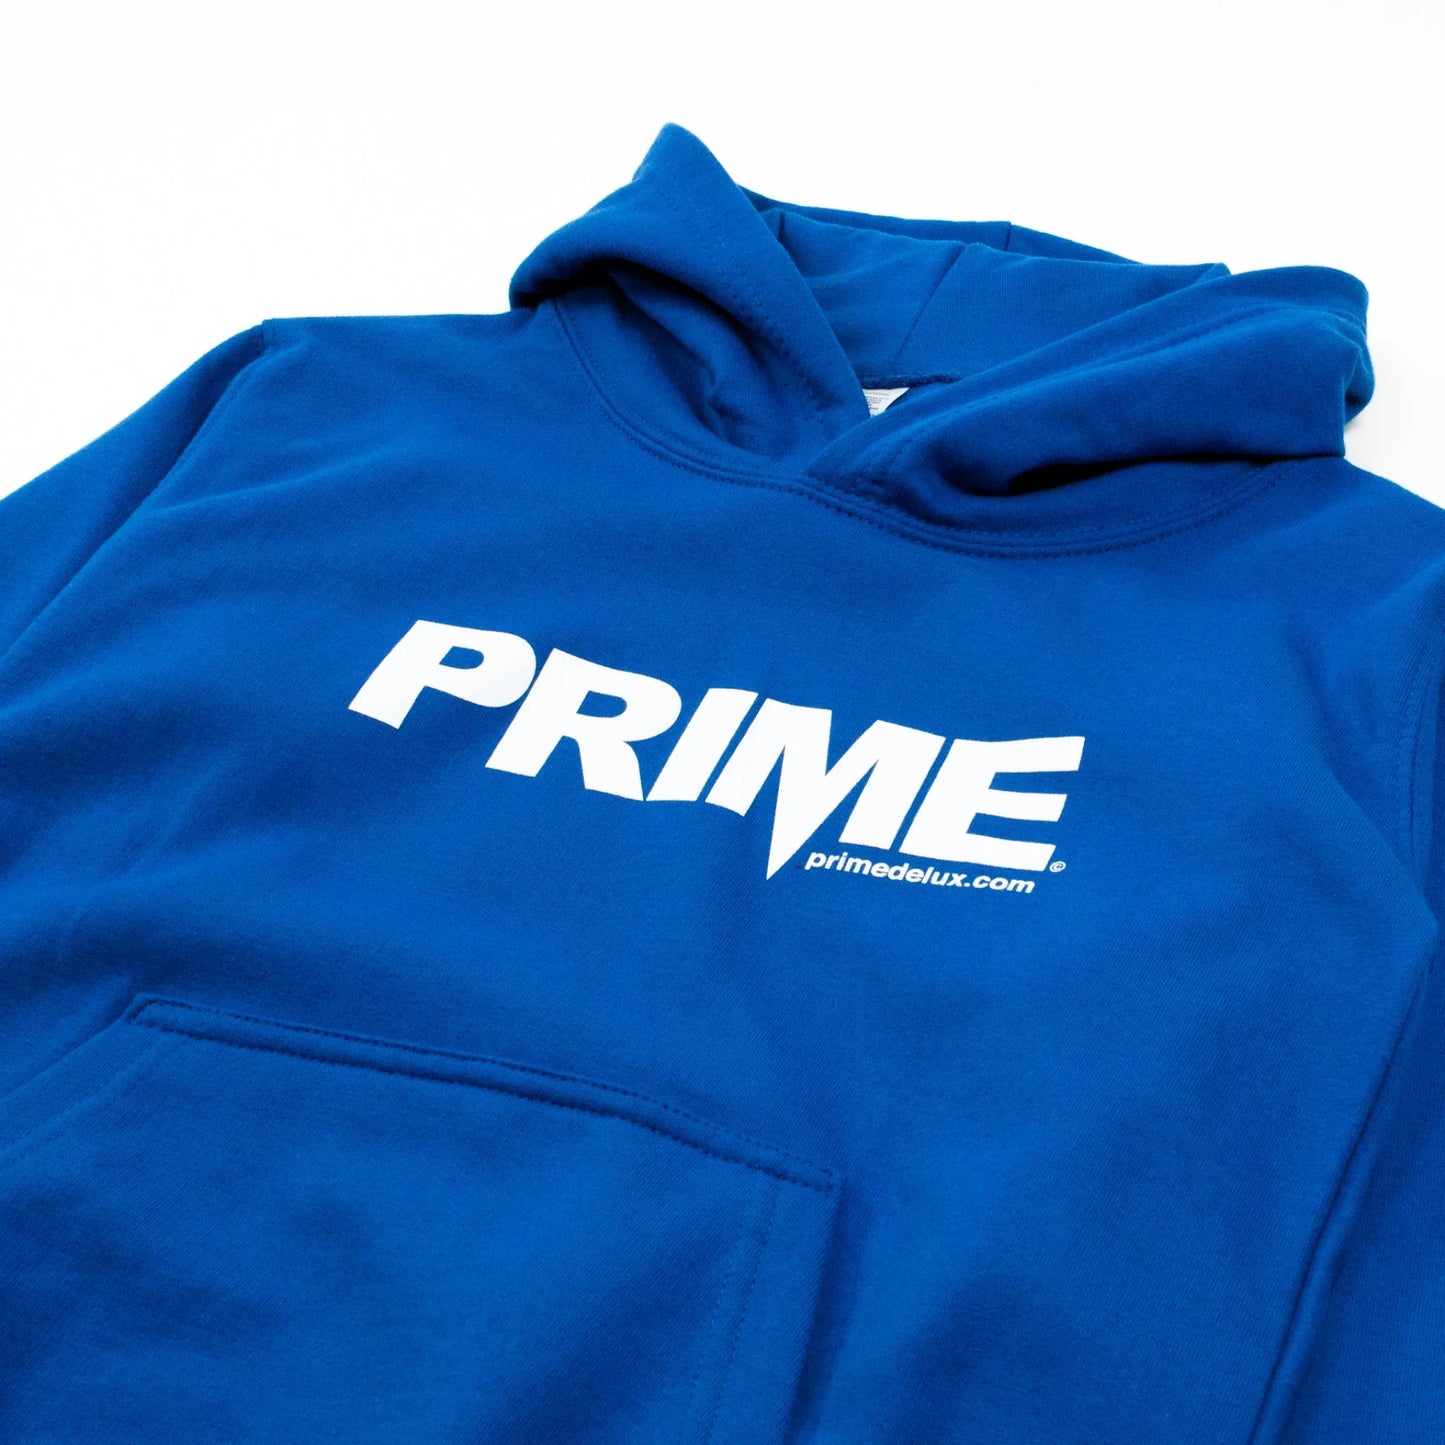 Prime Delux OG Logo Kids Hooded Sweat - Royal Blue/White - Prime Delux Store